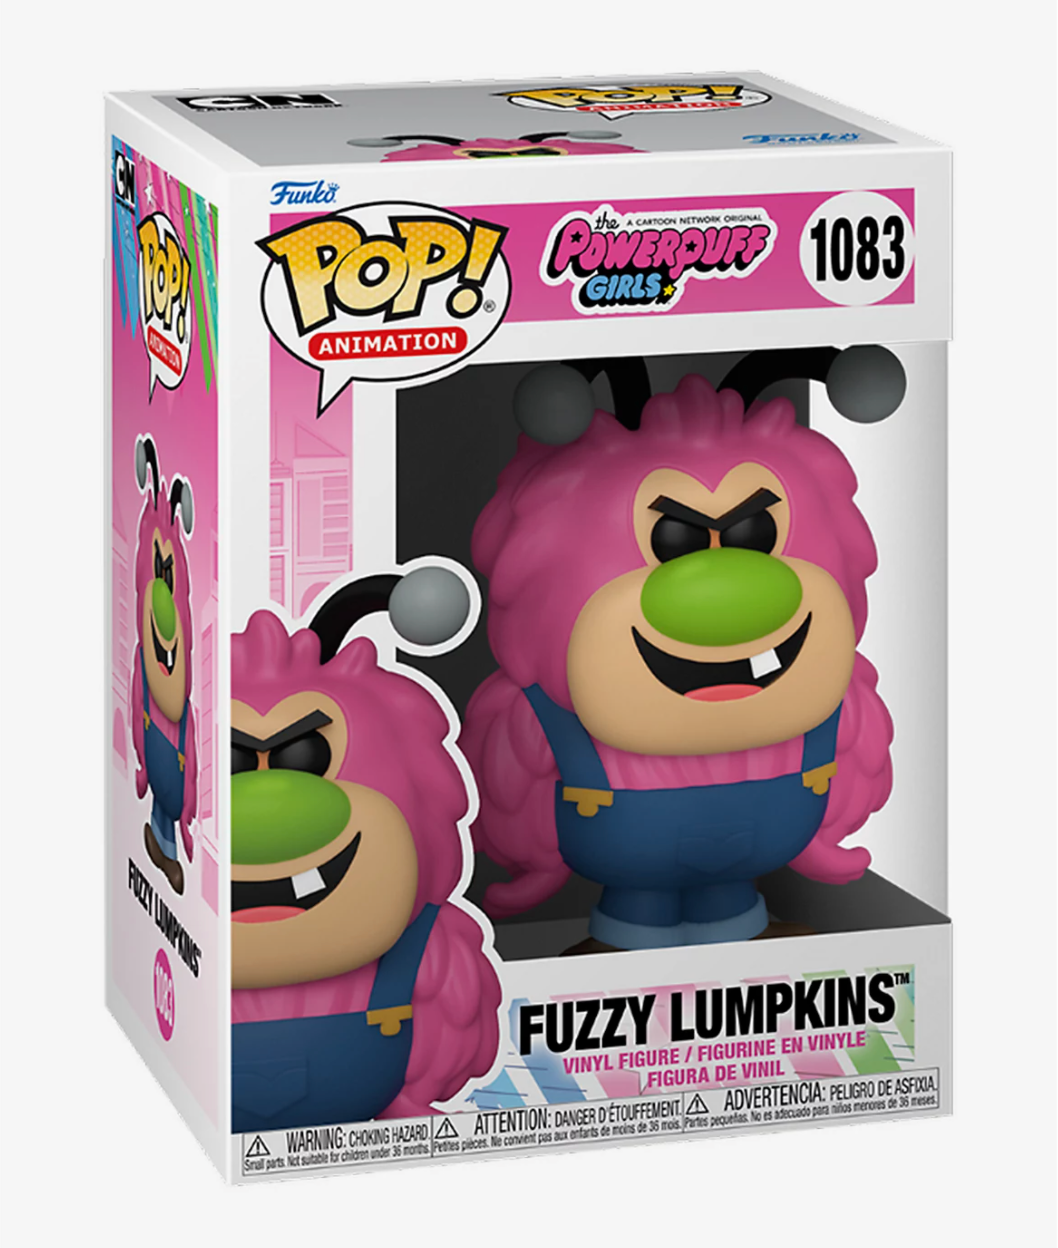 Funko Pop! Animations: The Powerpuff Girls Fuzzy Lumpkins #1083 Vinyl Figure